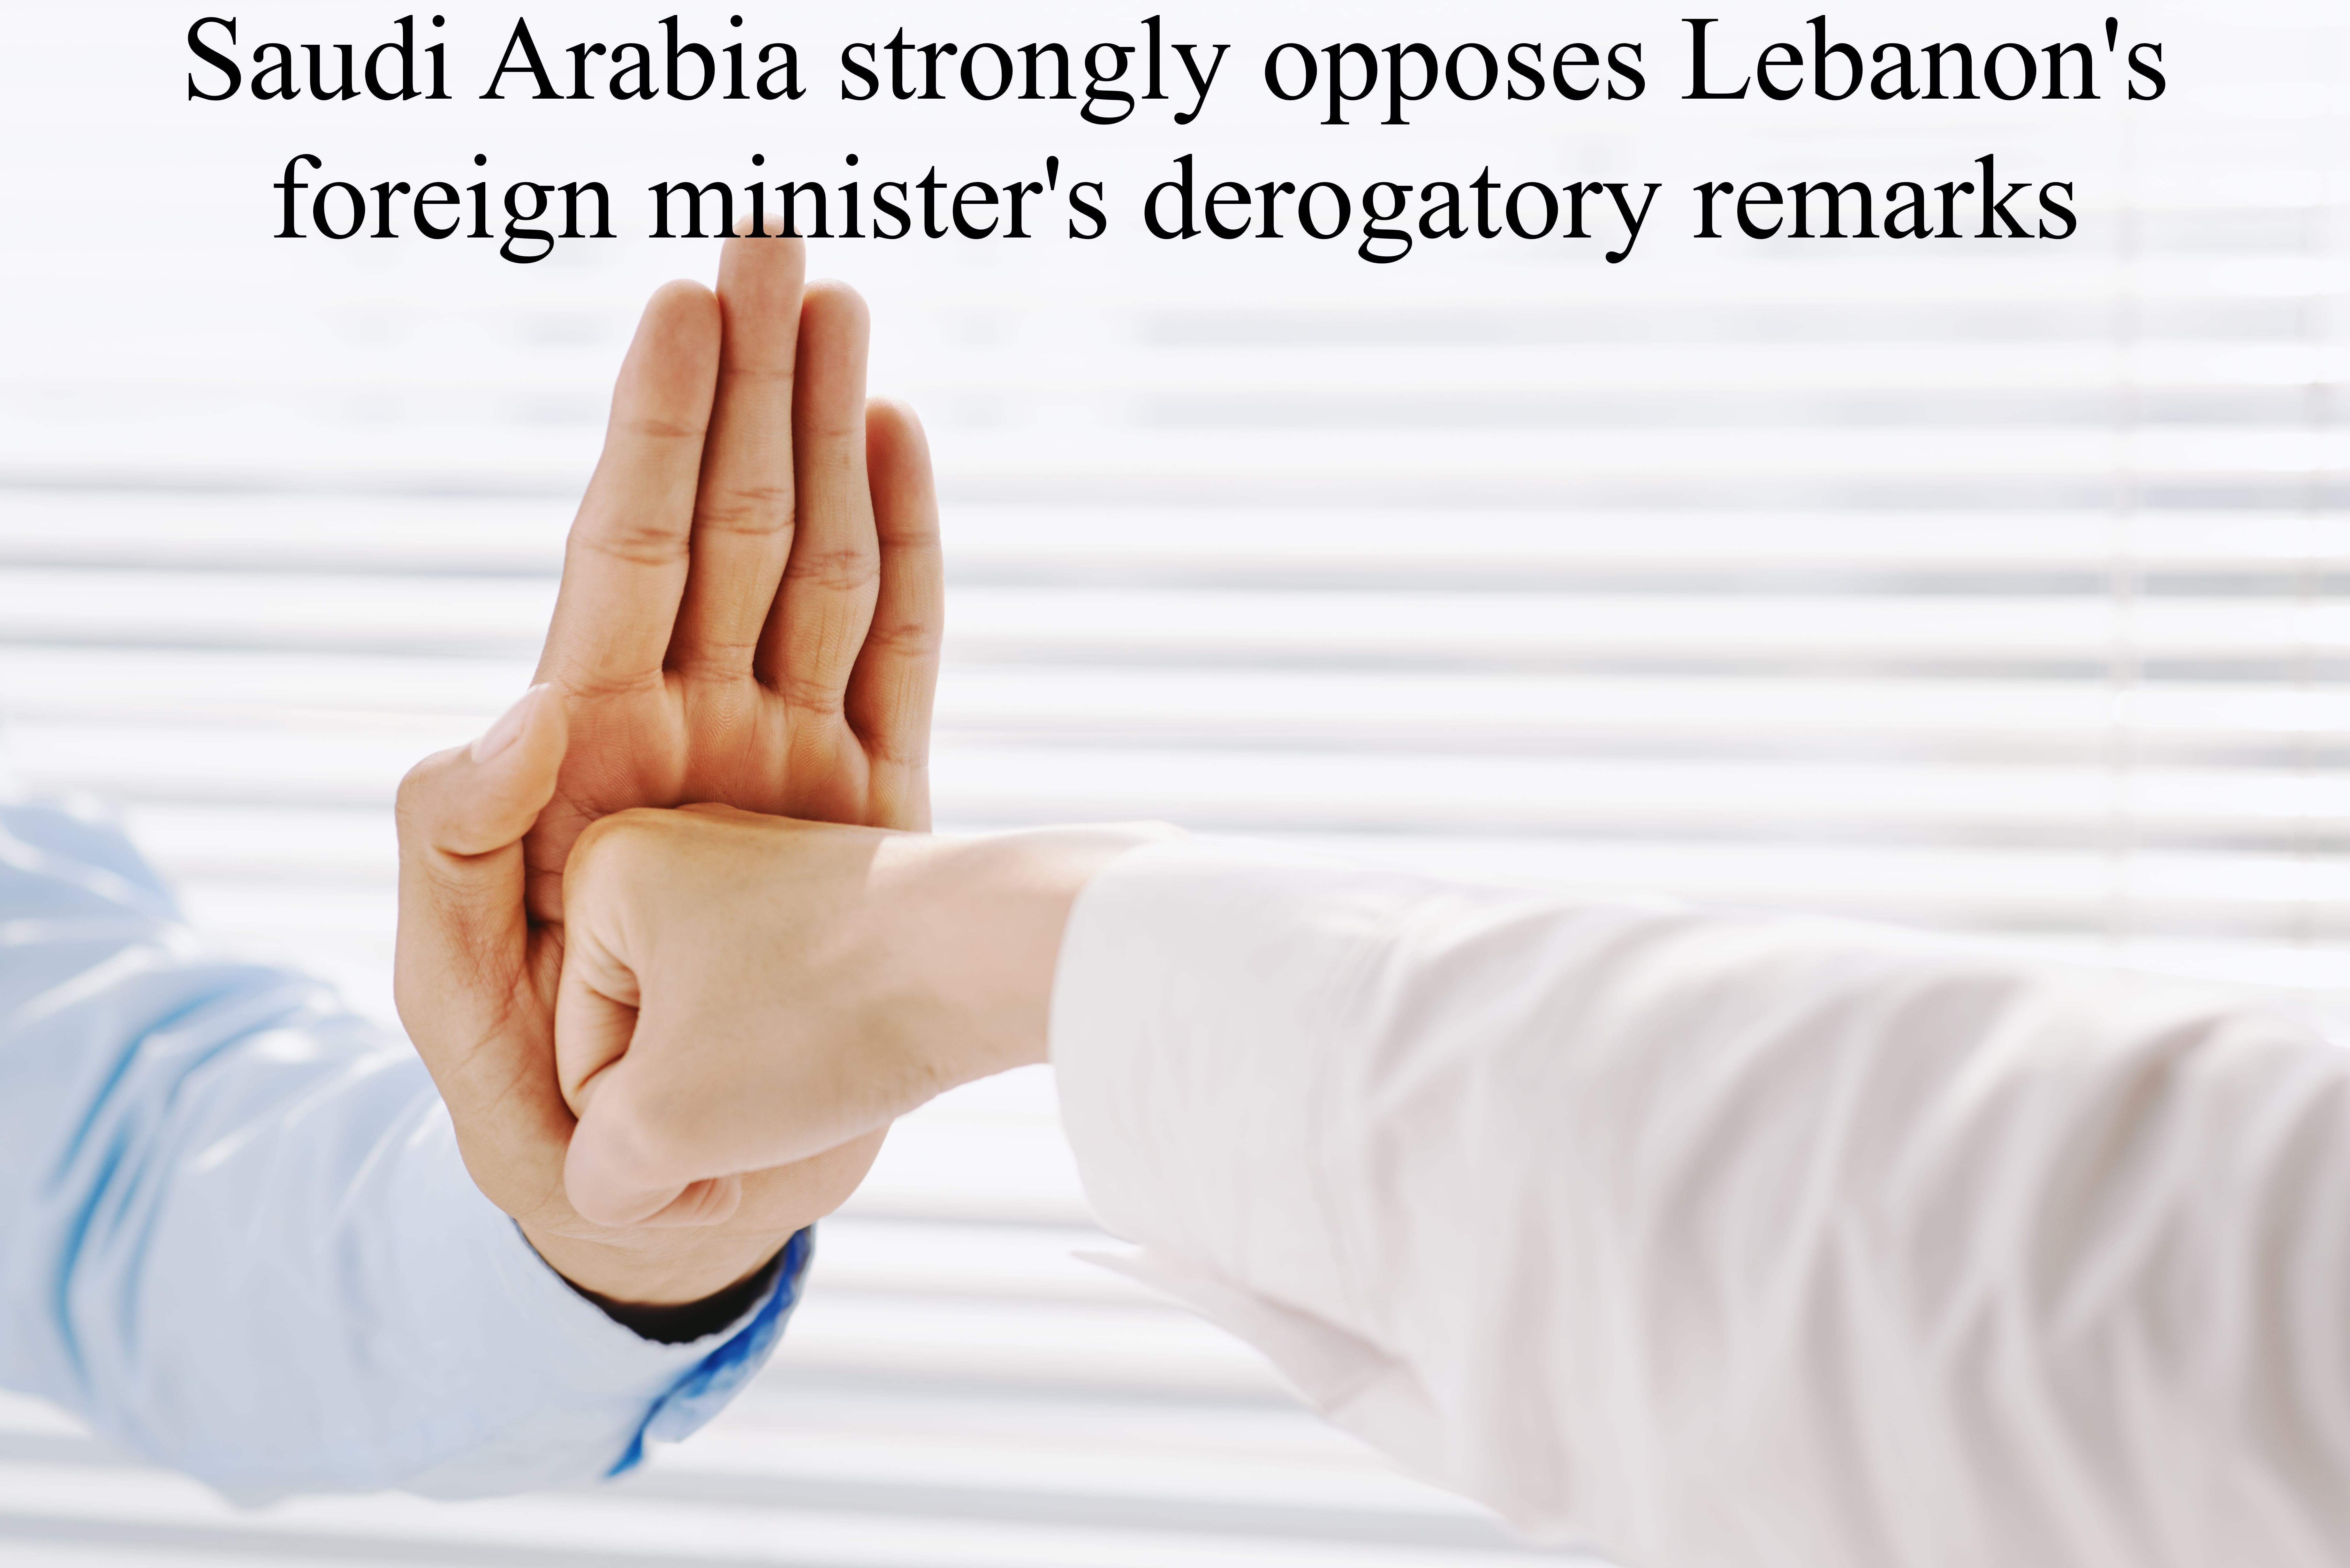 Saudi Arabia strongly opposes Lebanon's foreign minister's derogatory remarks